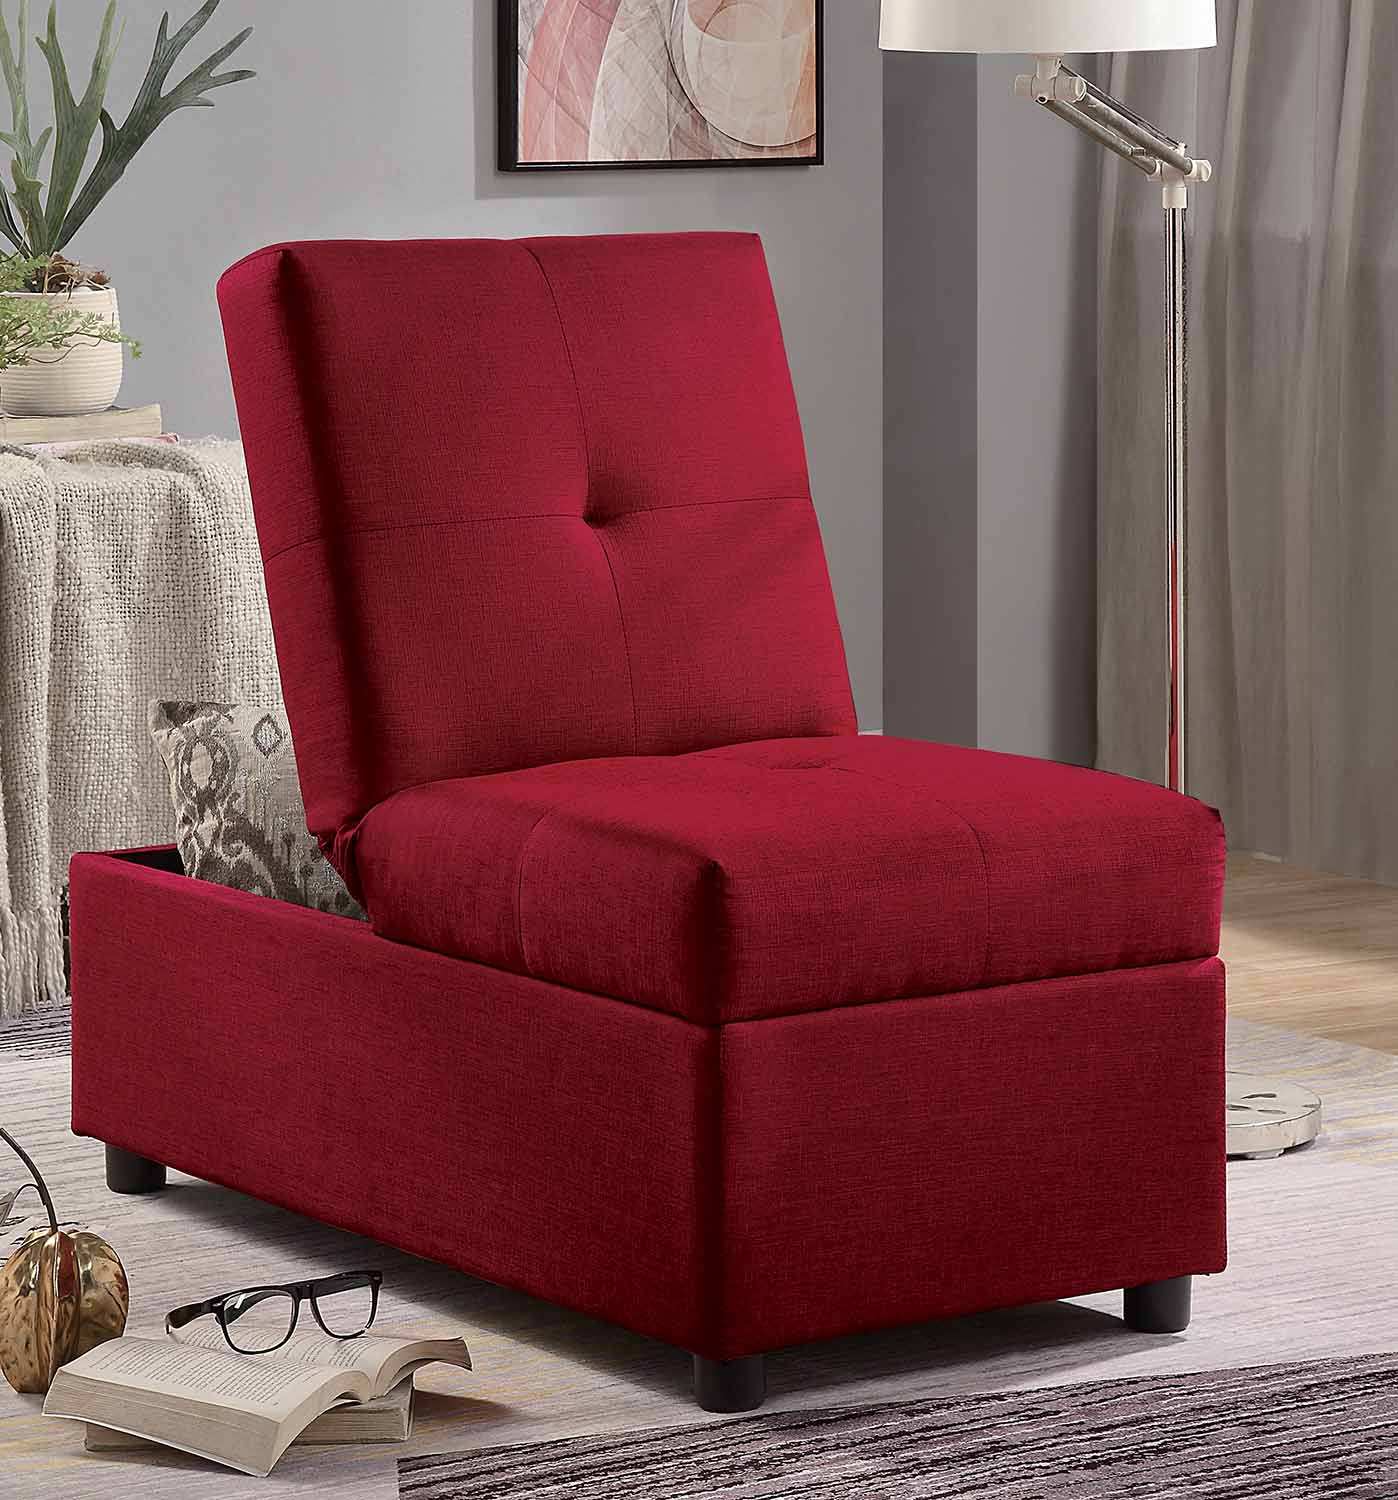 Homelegance Denby Storage Ottoman/Chair - Red